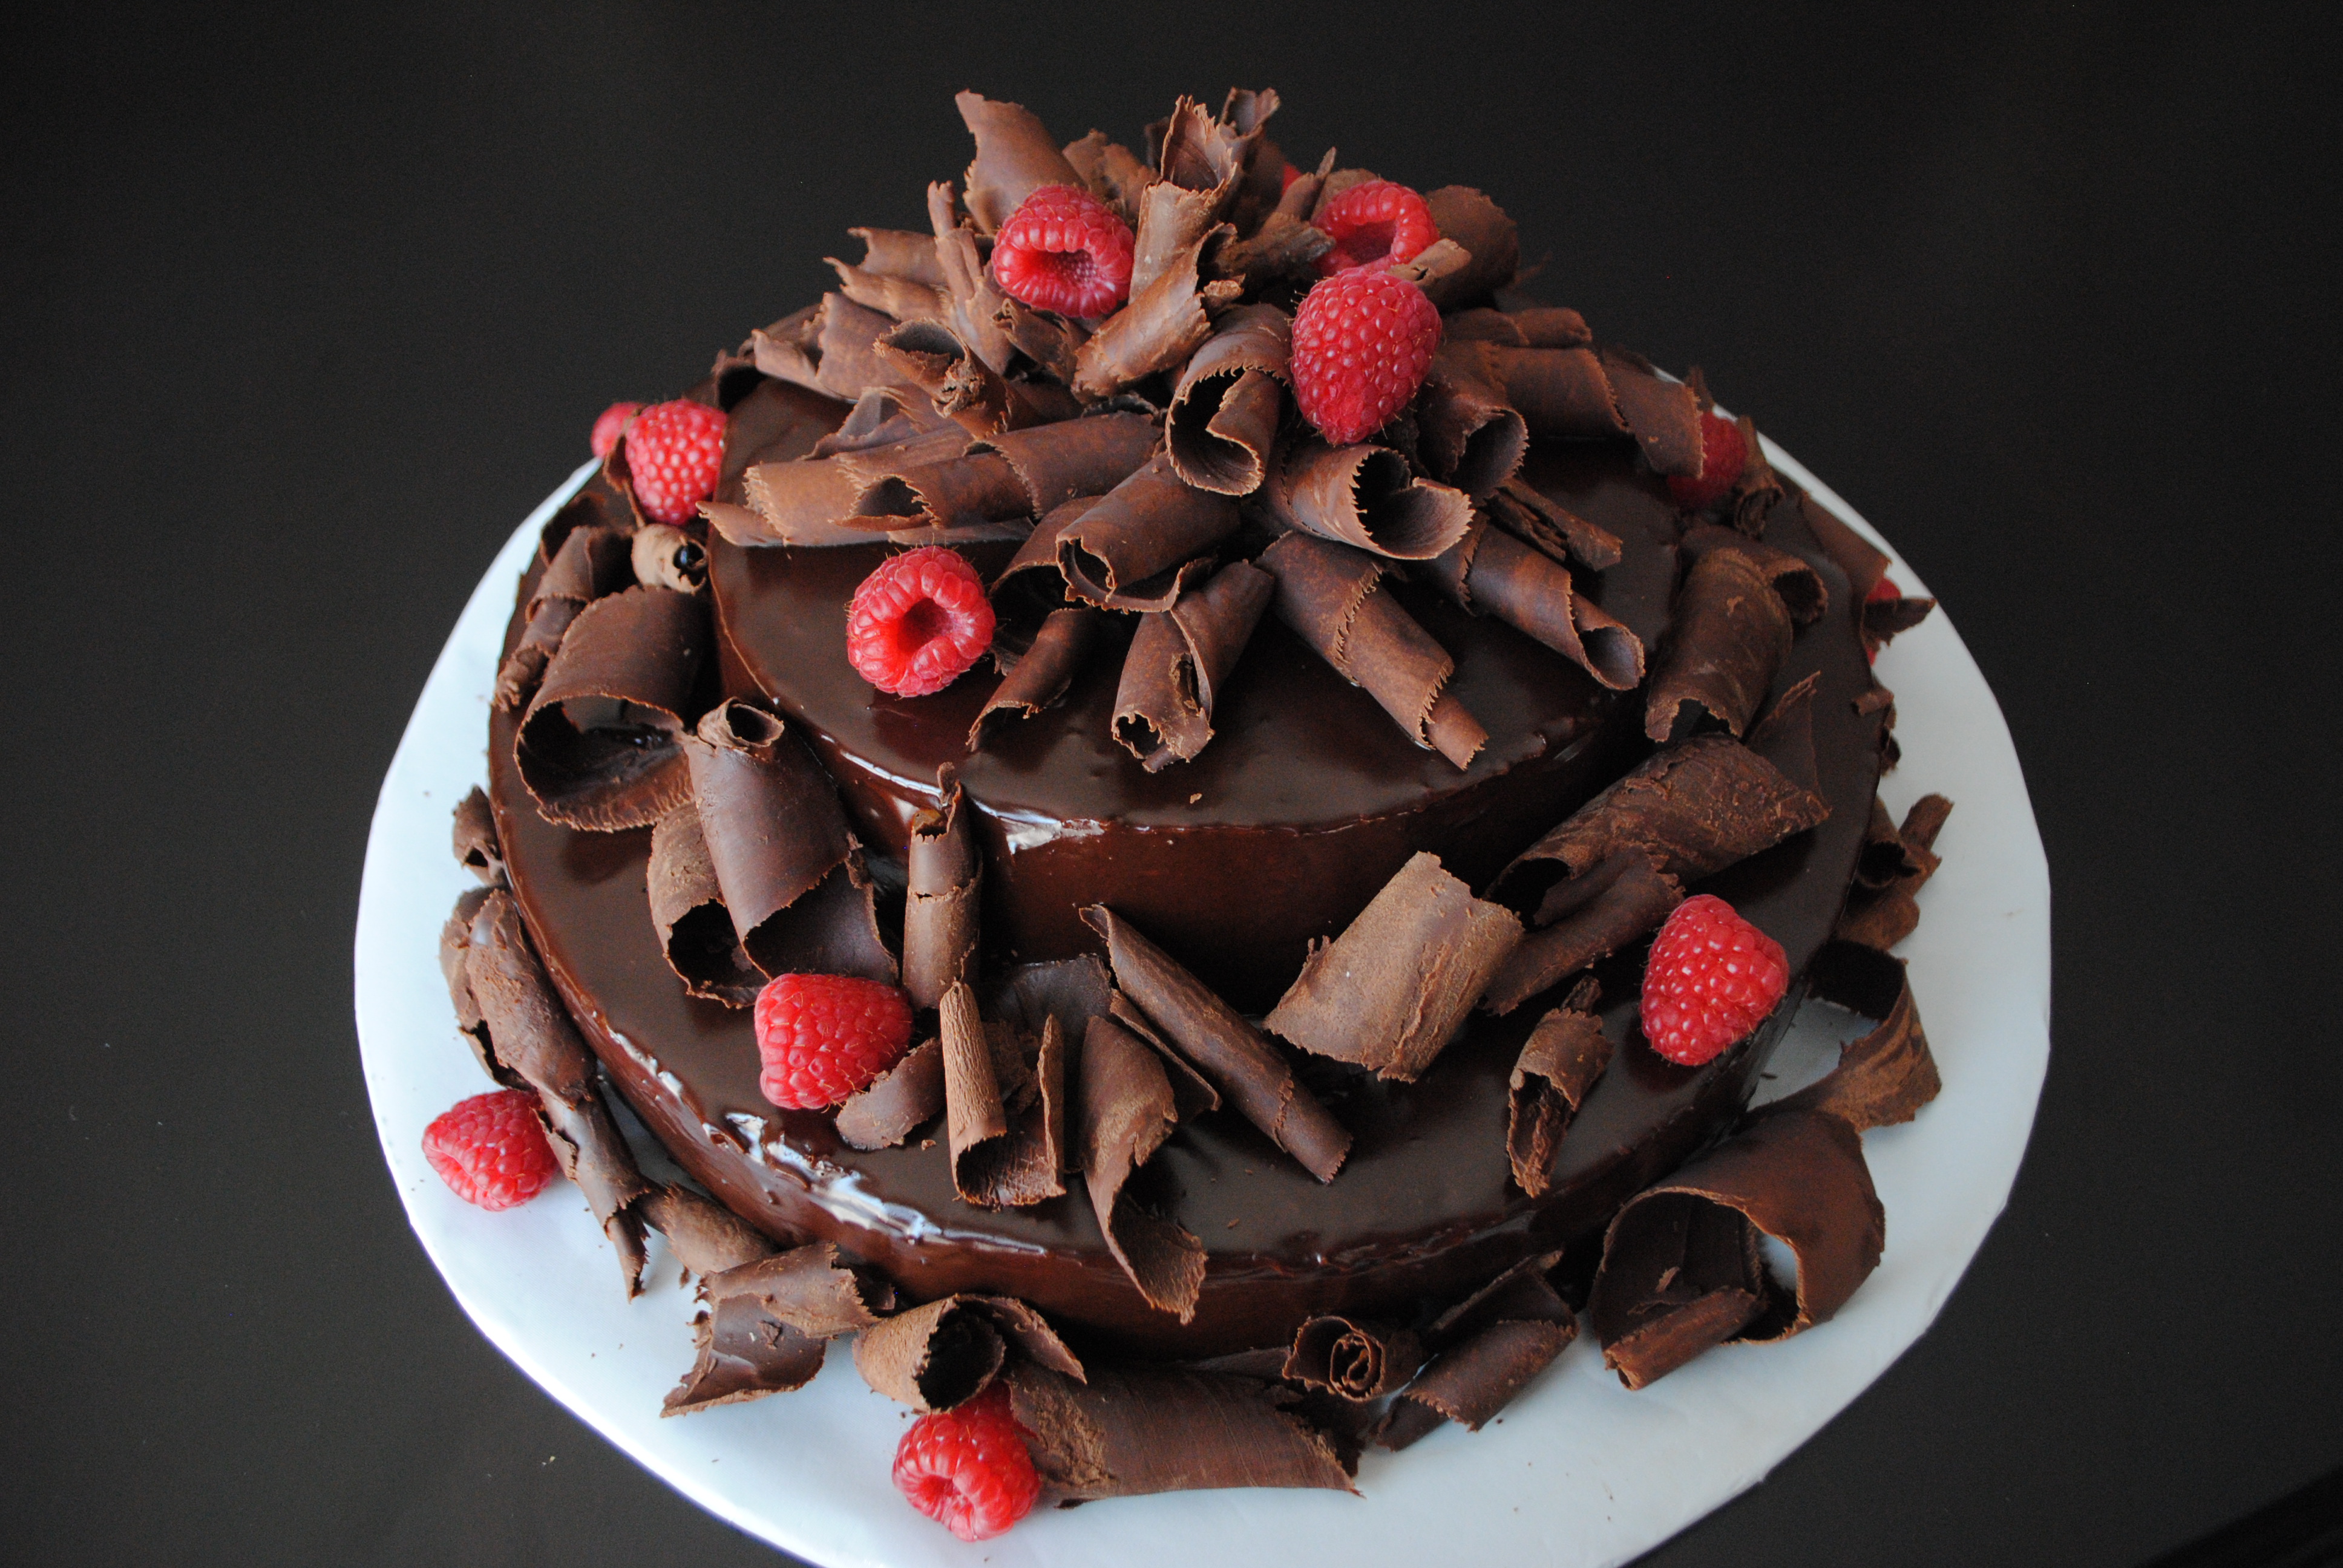  Chocolate  Cake  with Chocolate  Curls and Raspberries 